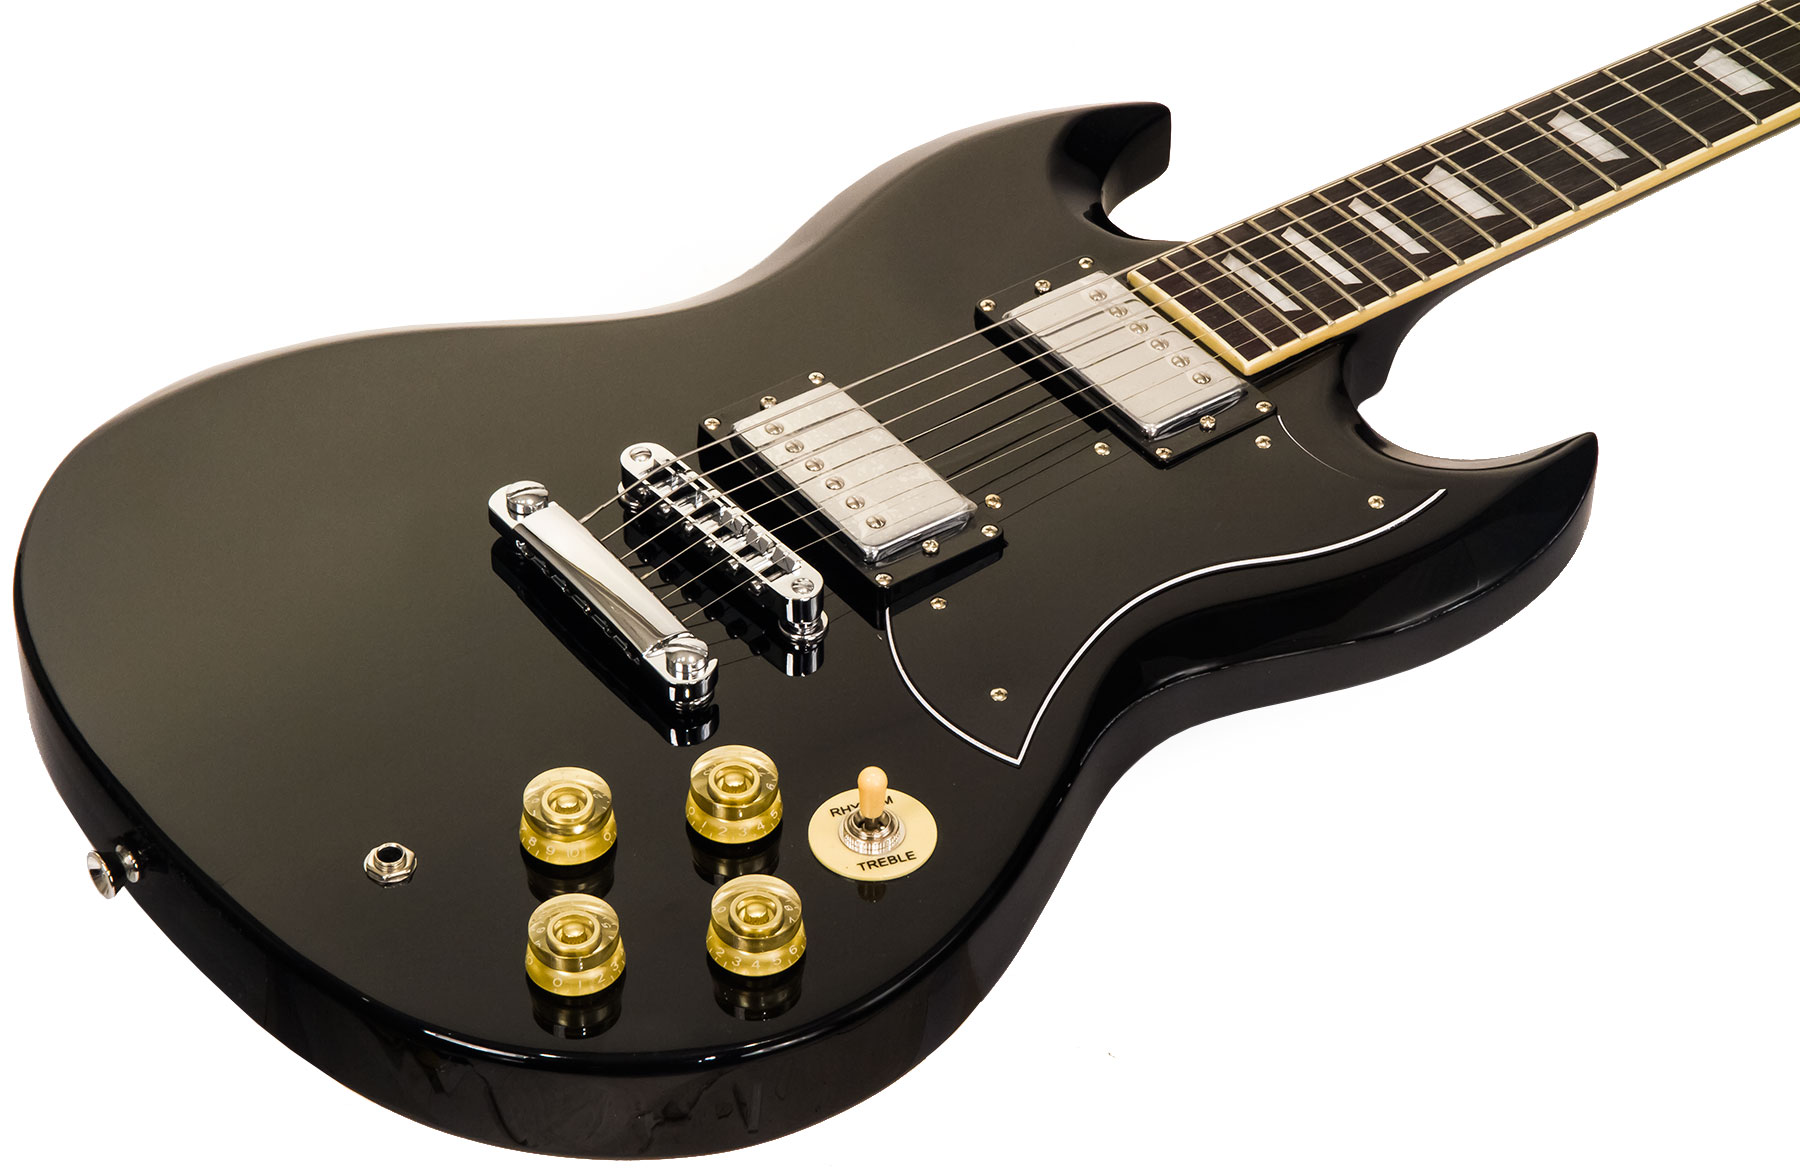 Eastone Sdc70 Hh Ht Pur - Black - Guitarra electrica retro rock - Variation 1